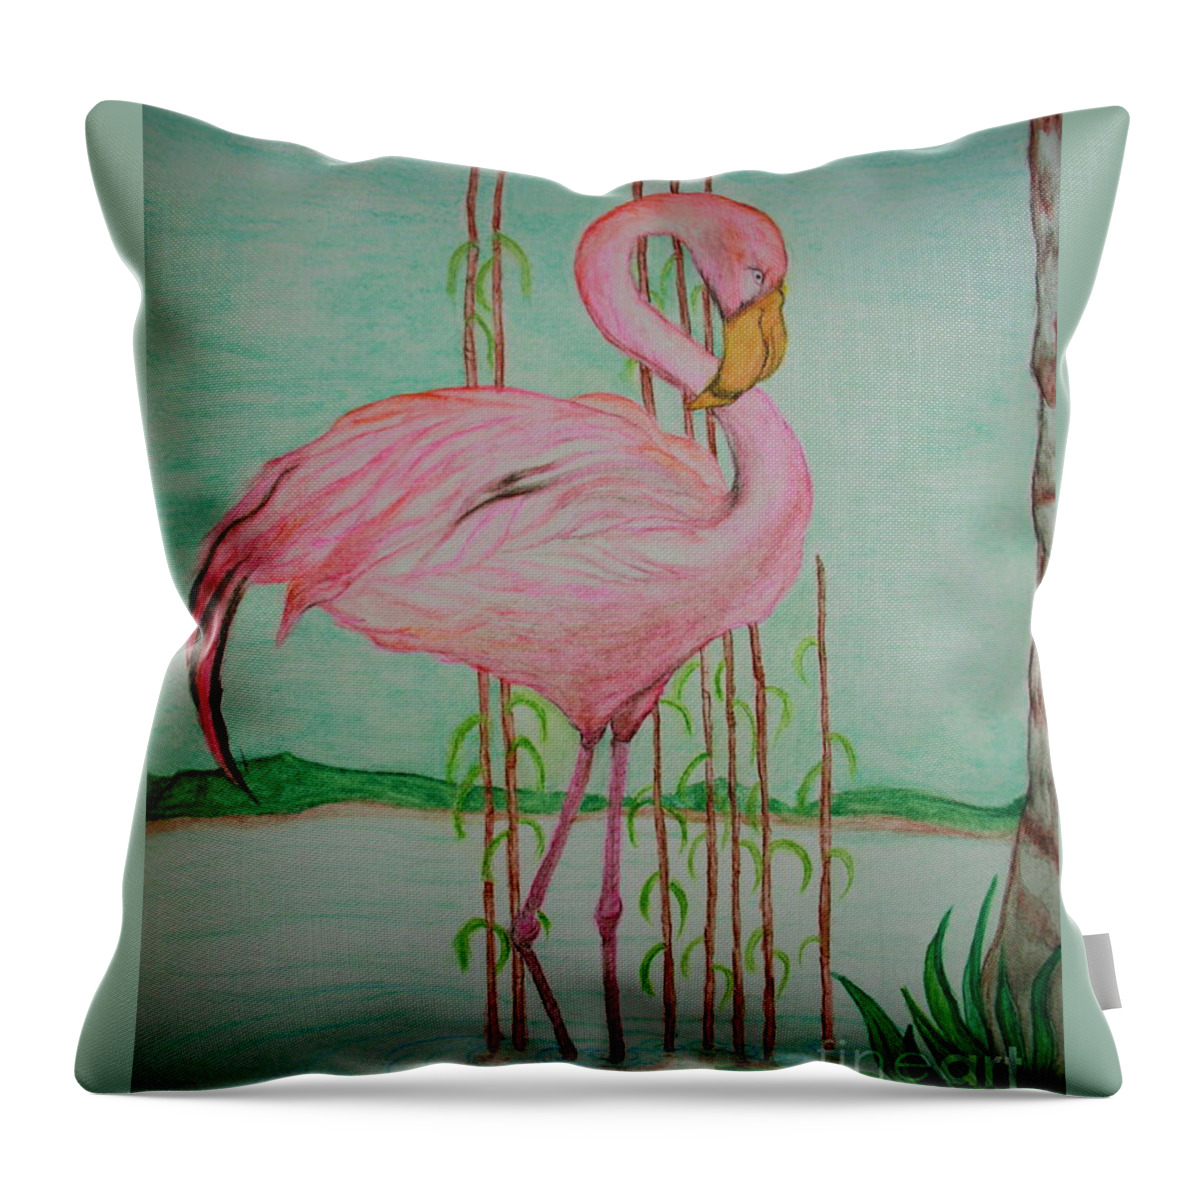 Watercolor Pencil Drawings. Pink Flamingo Drawings. Flamingos. Throw Pillow featuring the painting Watercolor Pencil Flamingo by Christina A Pacillo